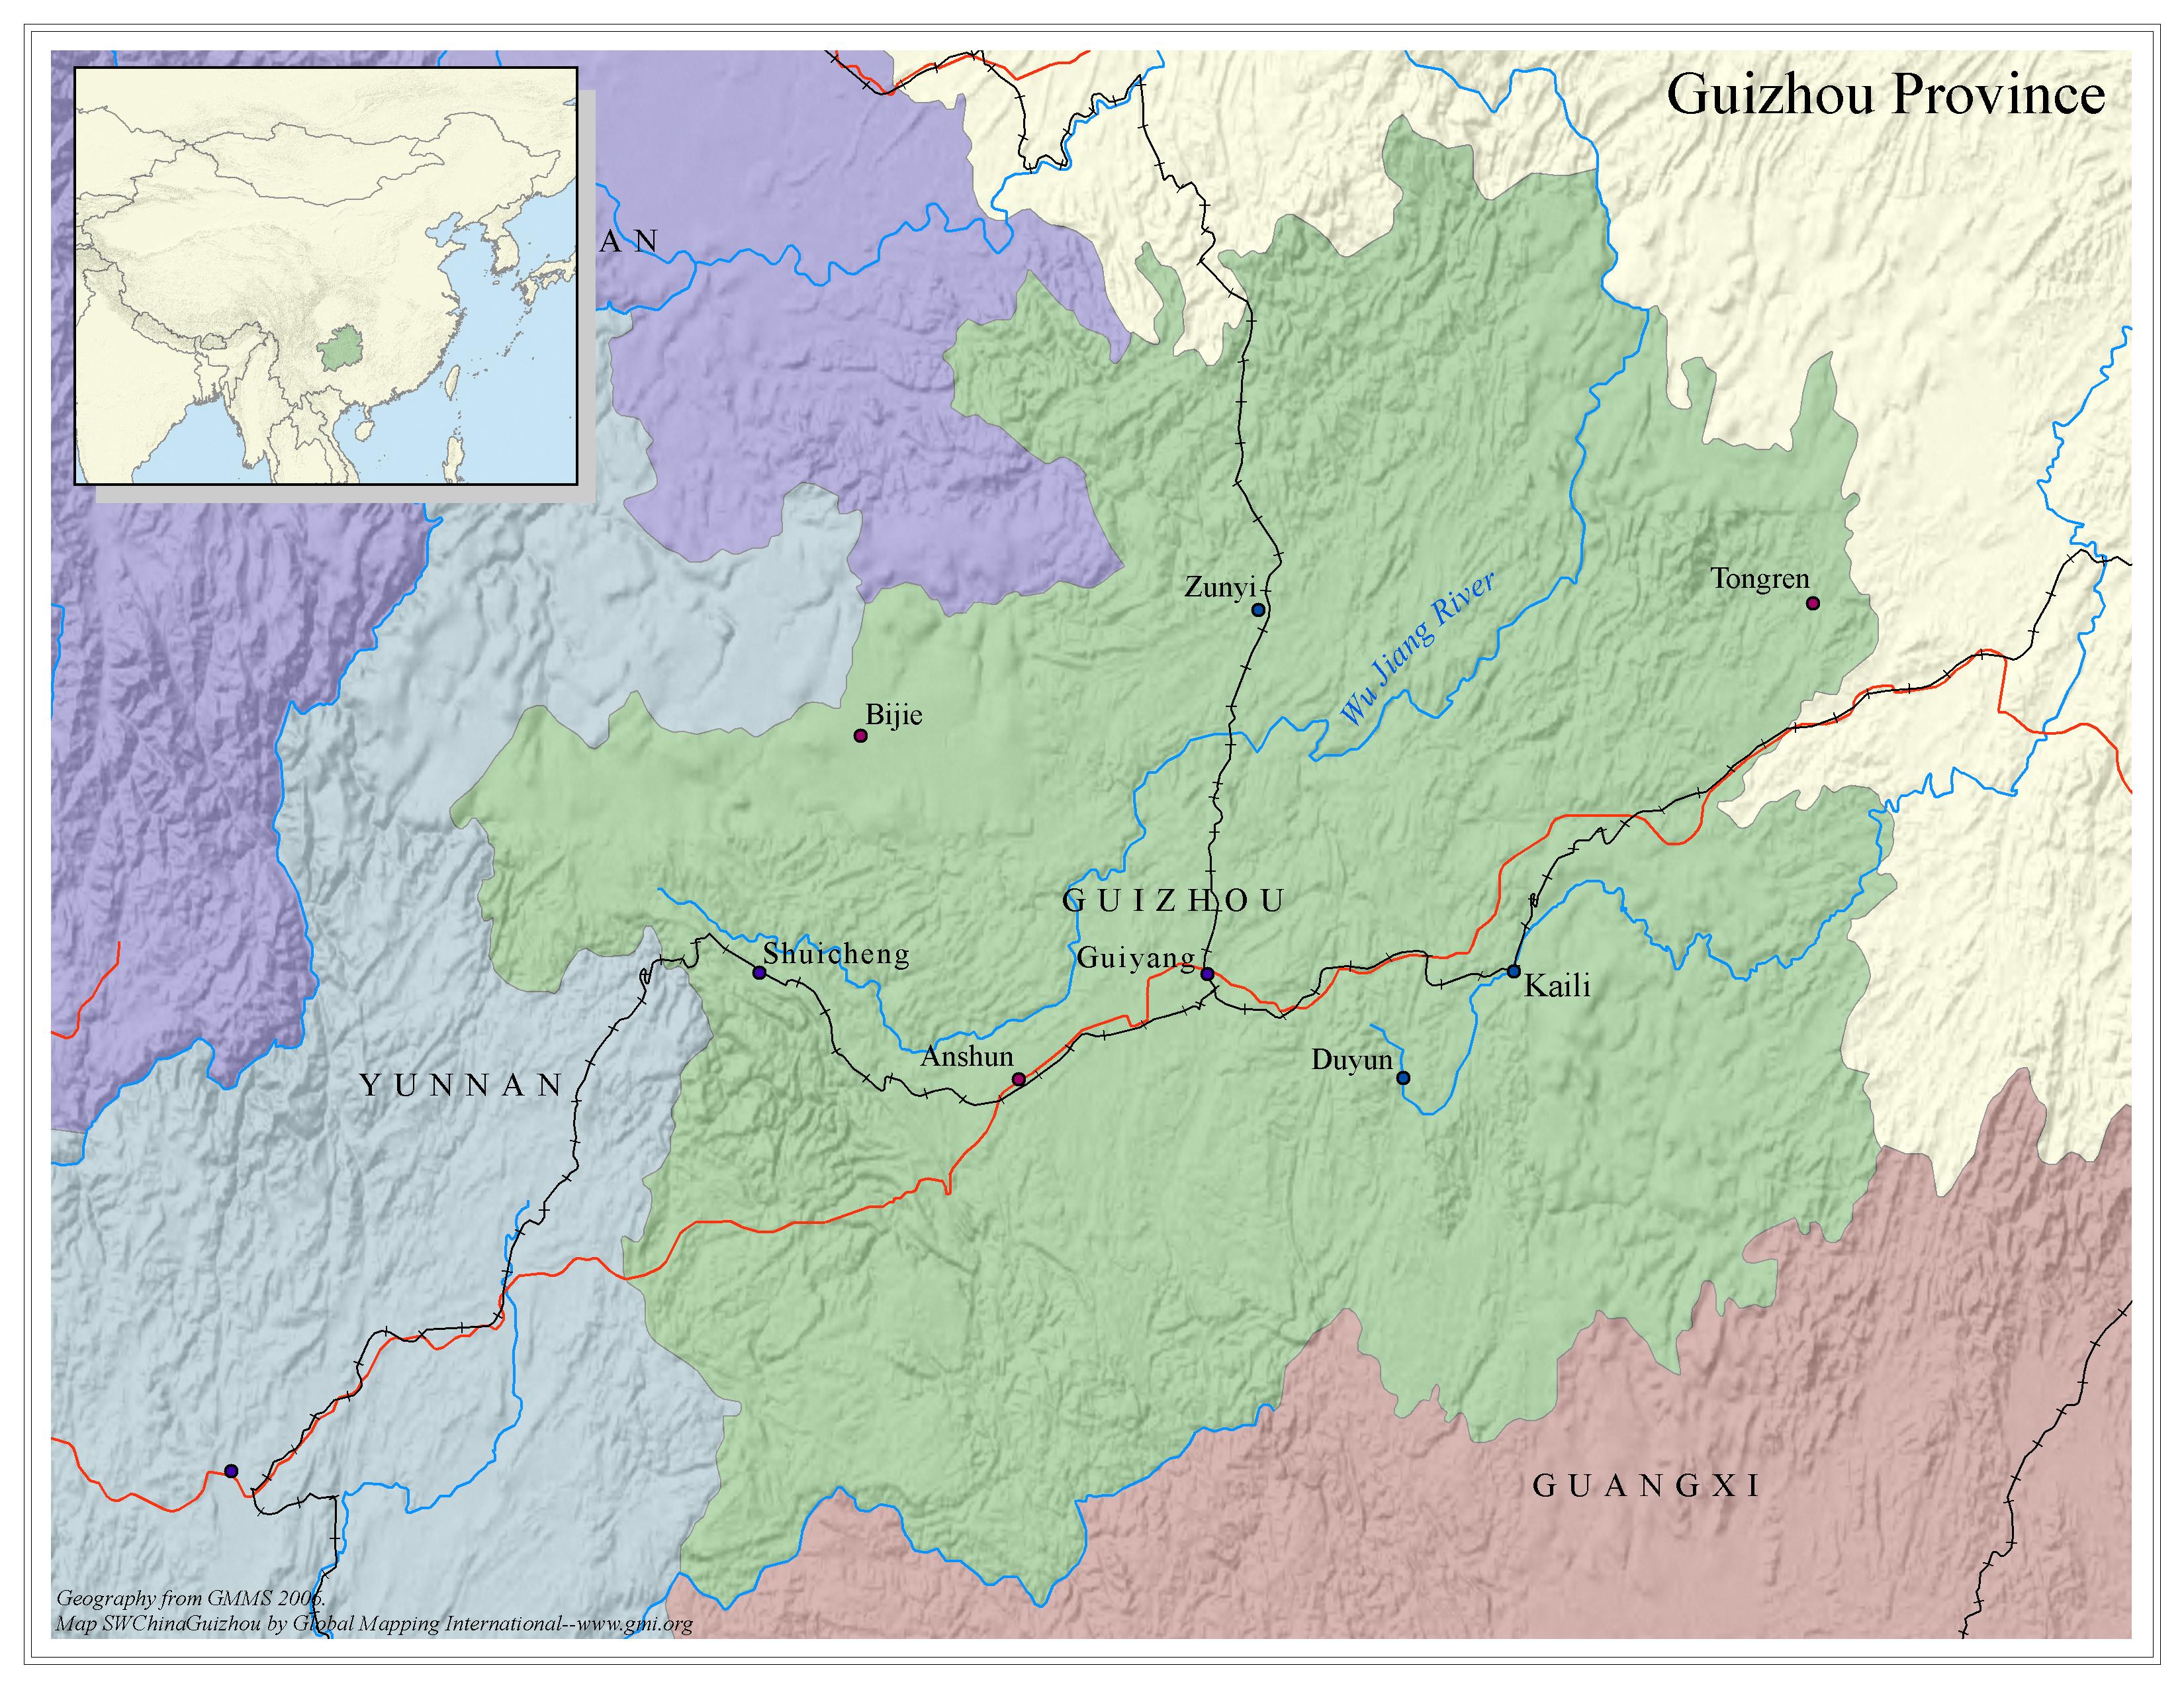 Guizhou Province - Political map